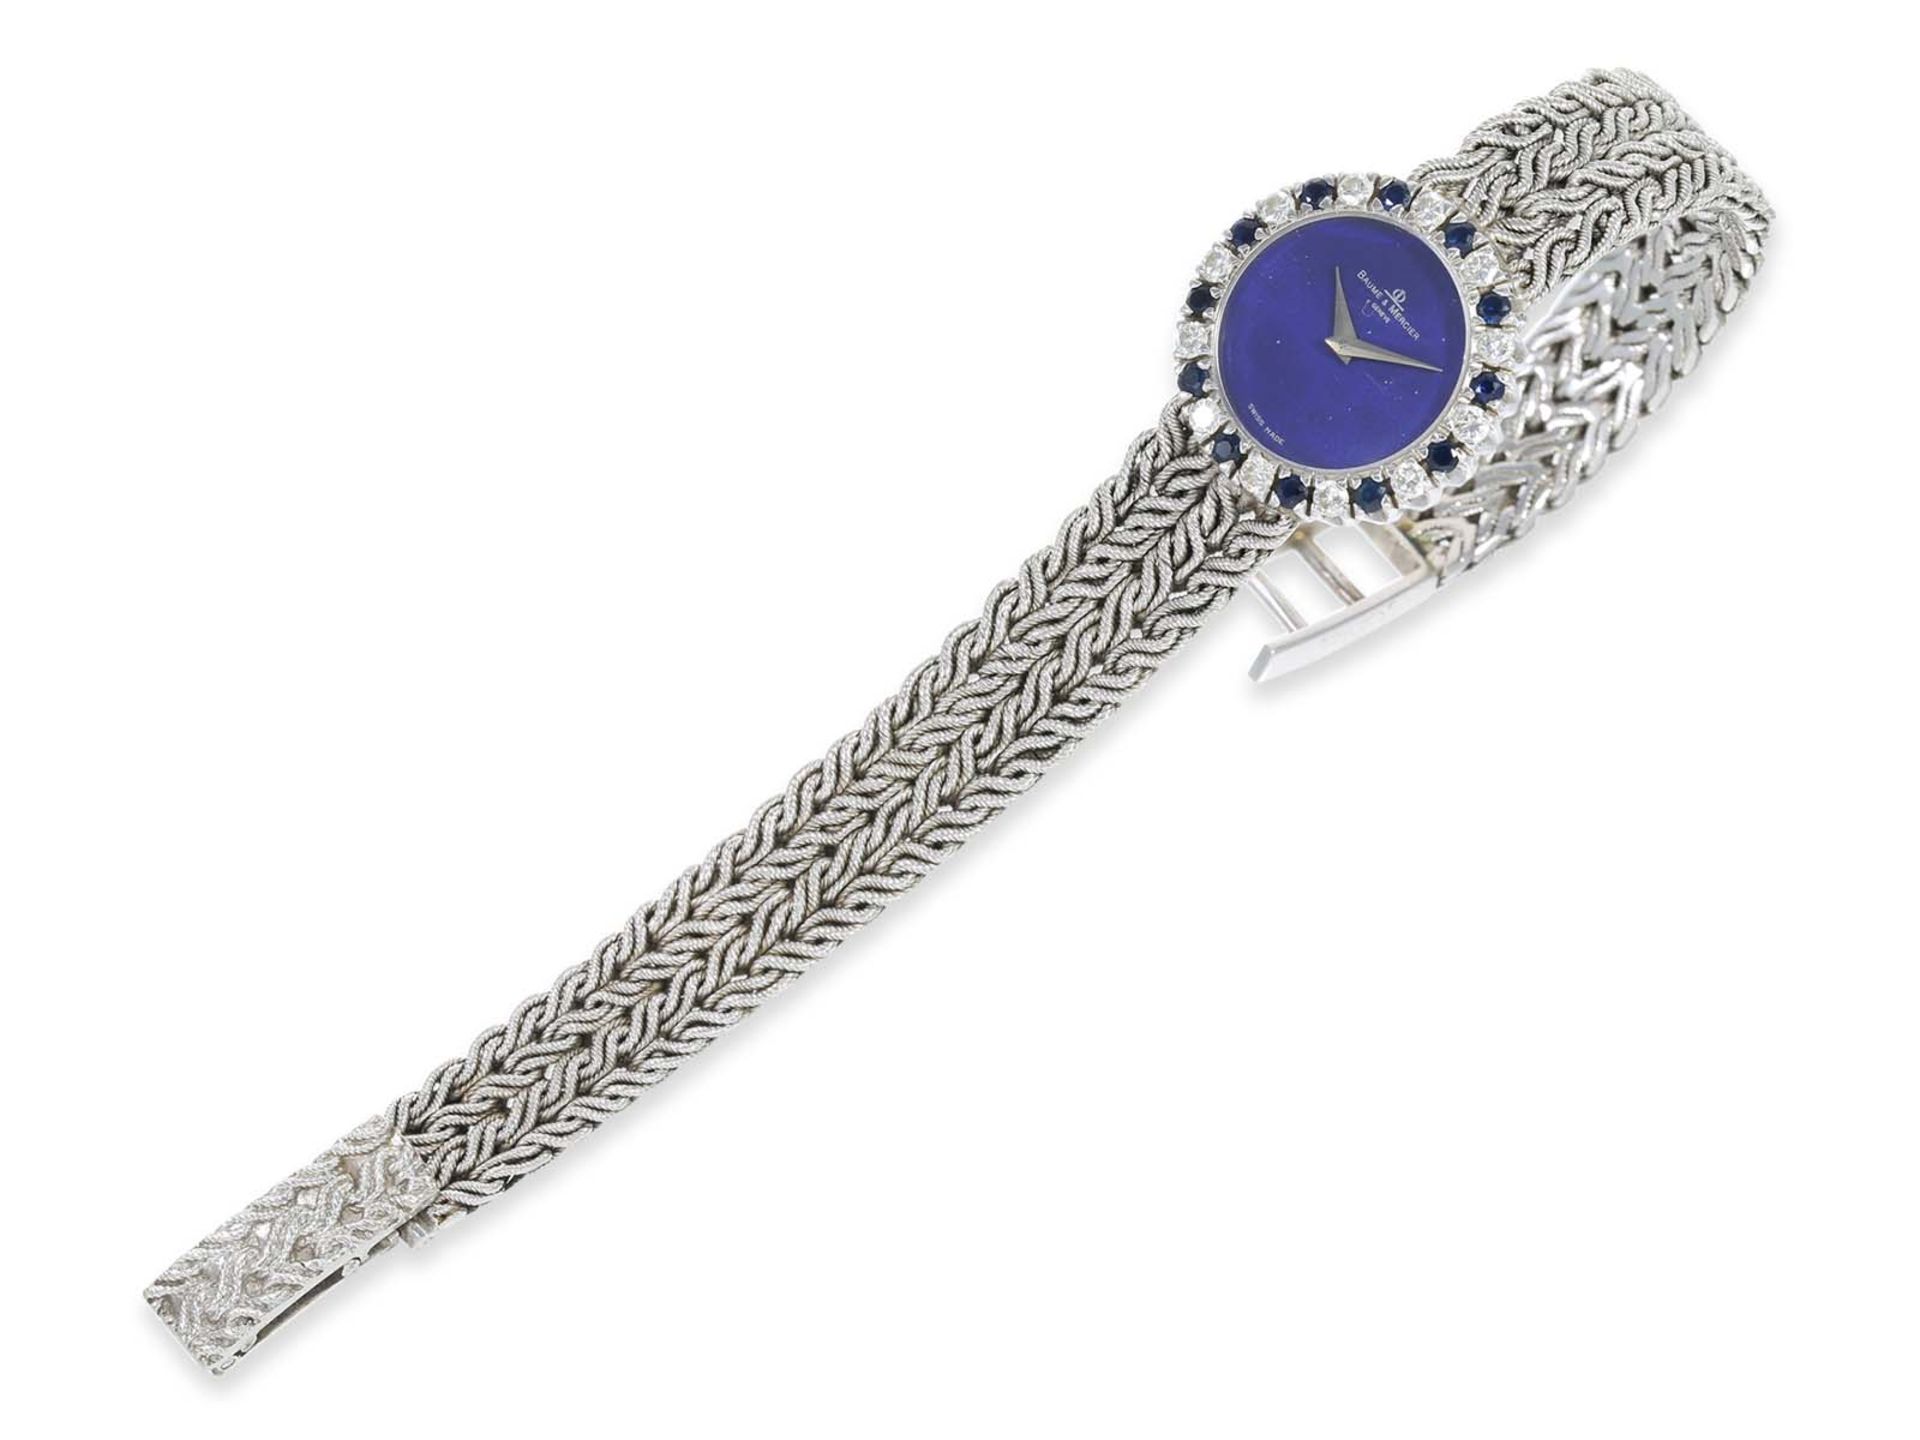 Wrist watch: high quality vintage Baume & Mercier ladies watch with diamond/sapphire bezel, total 1.